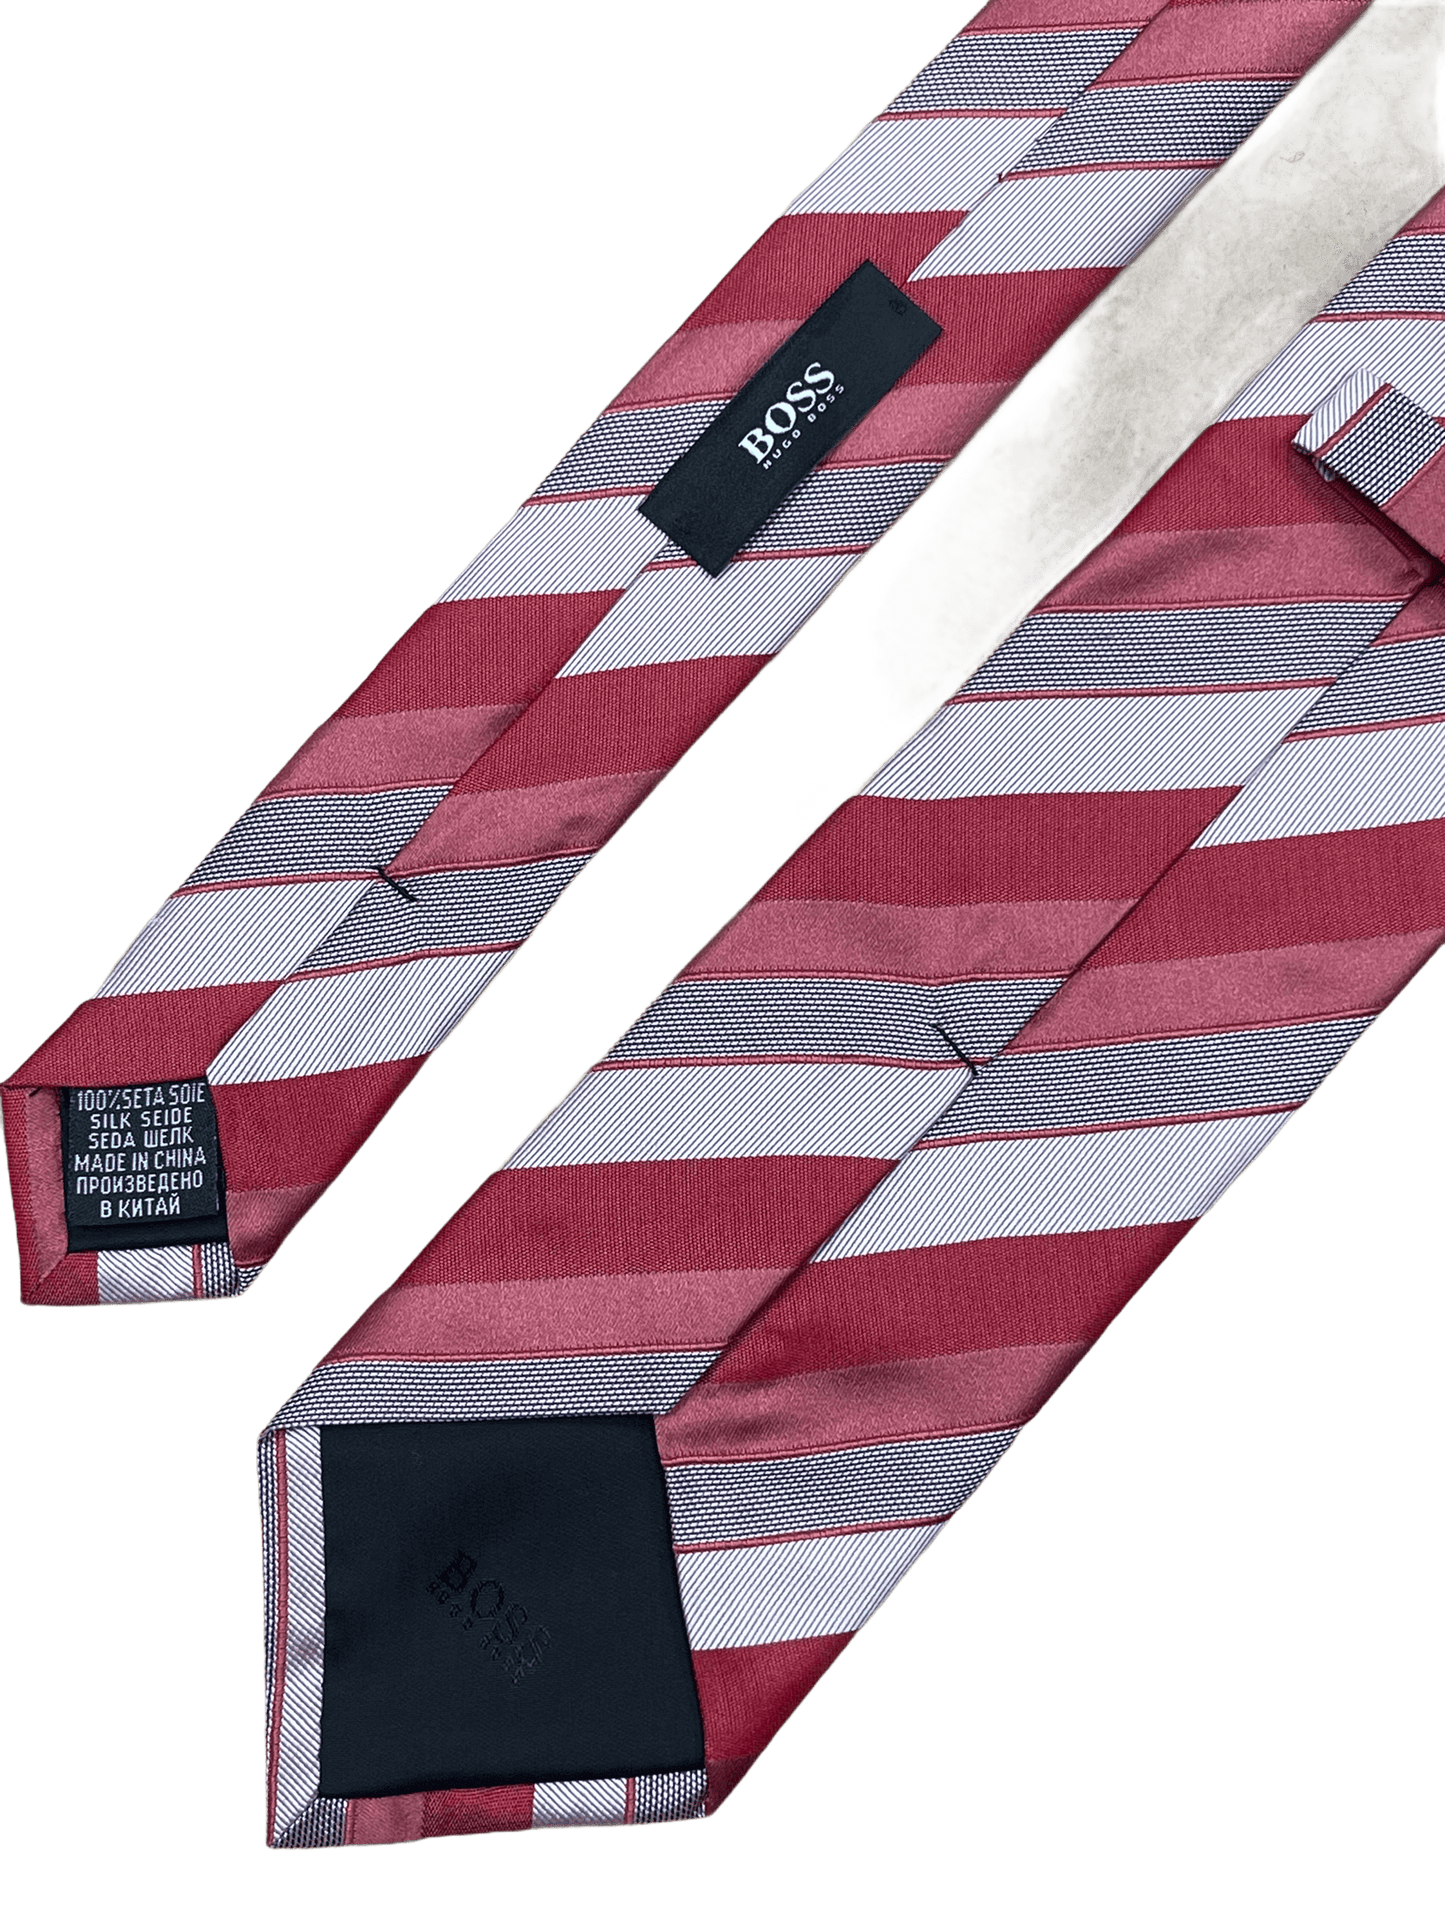 Hugo Boss red silver striped tie - Genuine Design